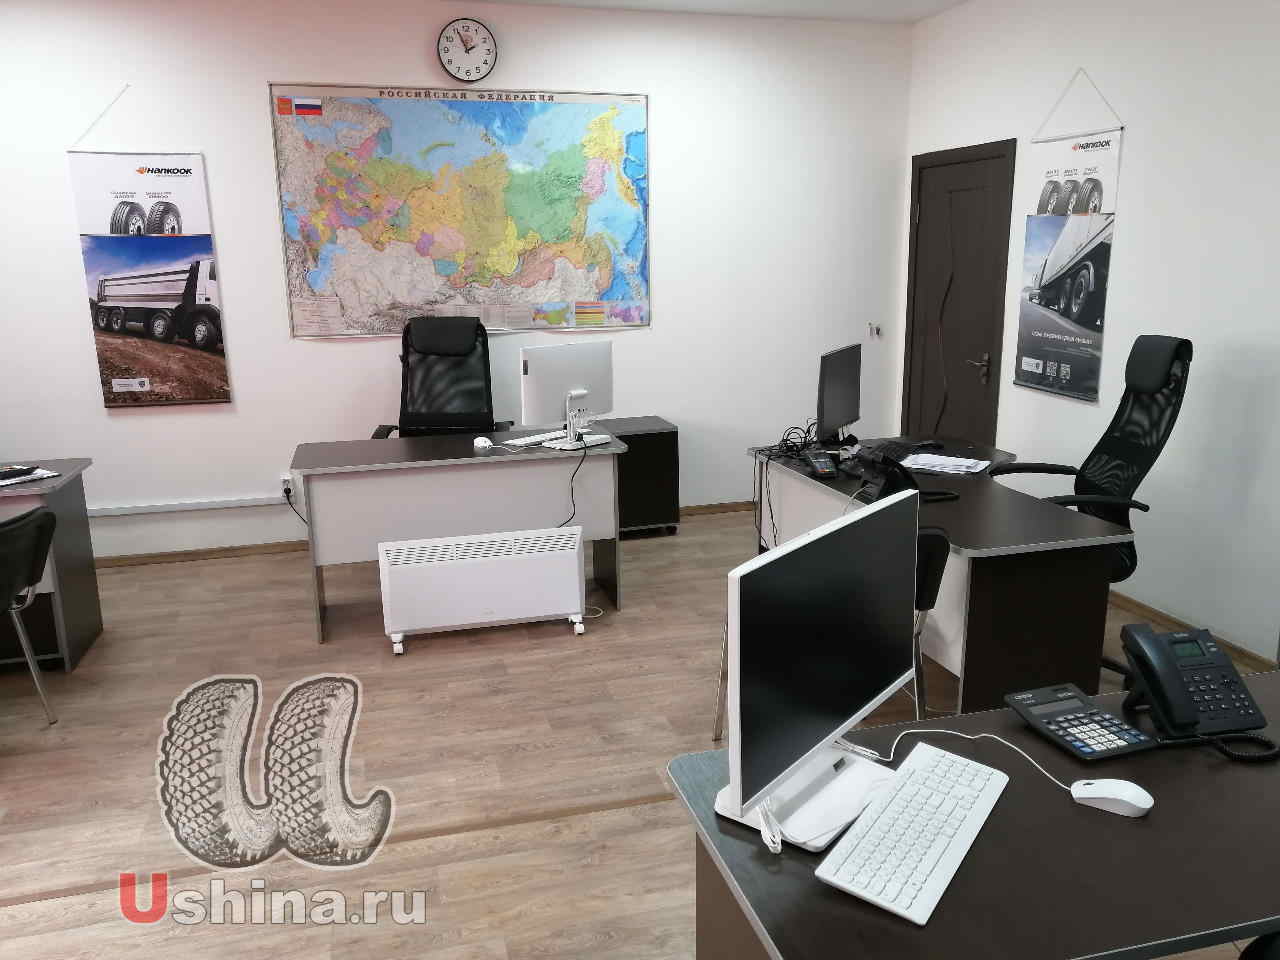 Офис Ushina.ru